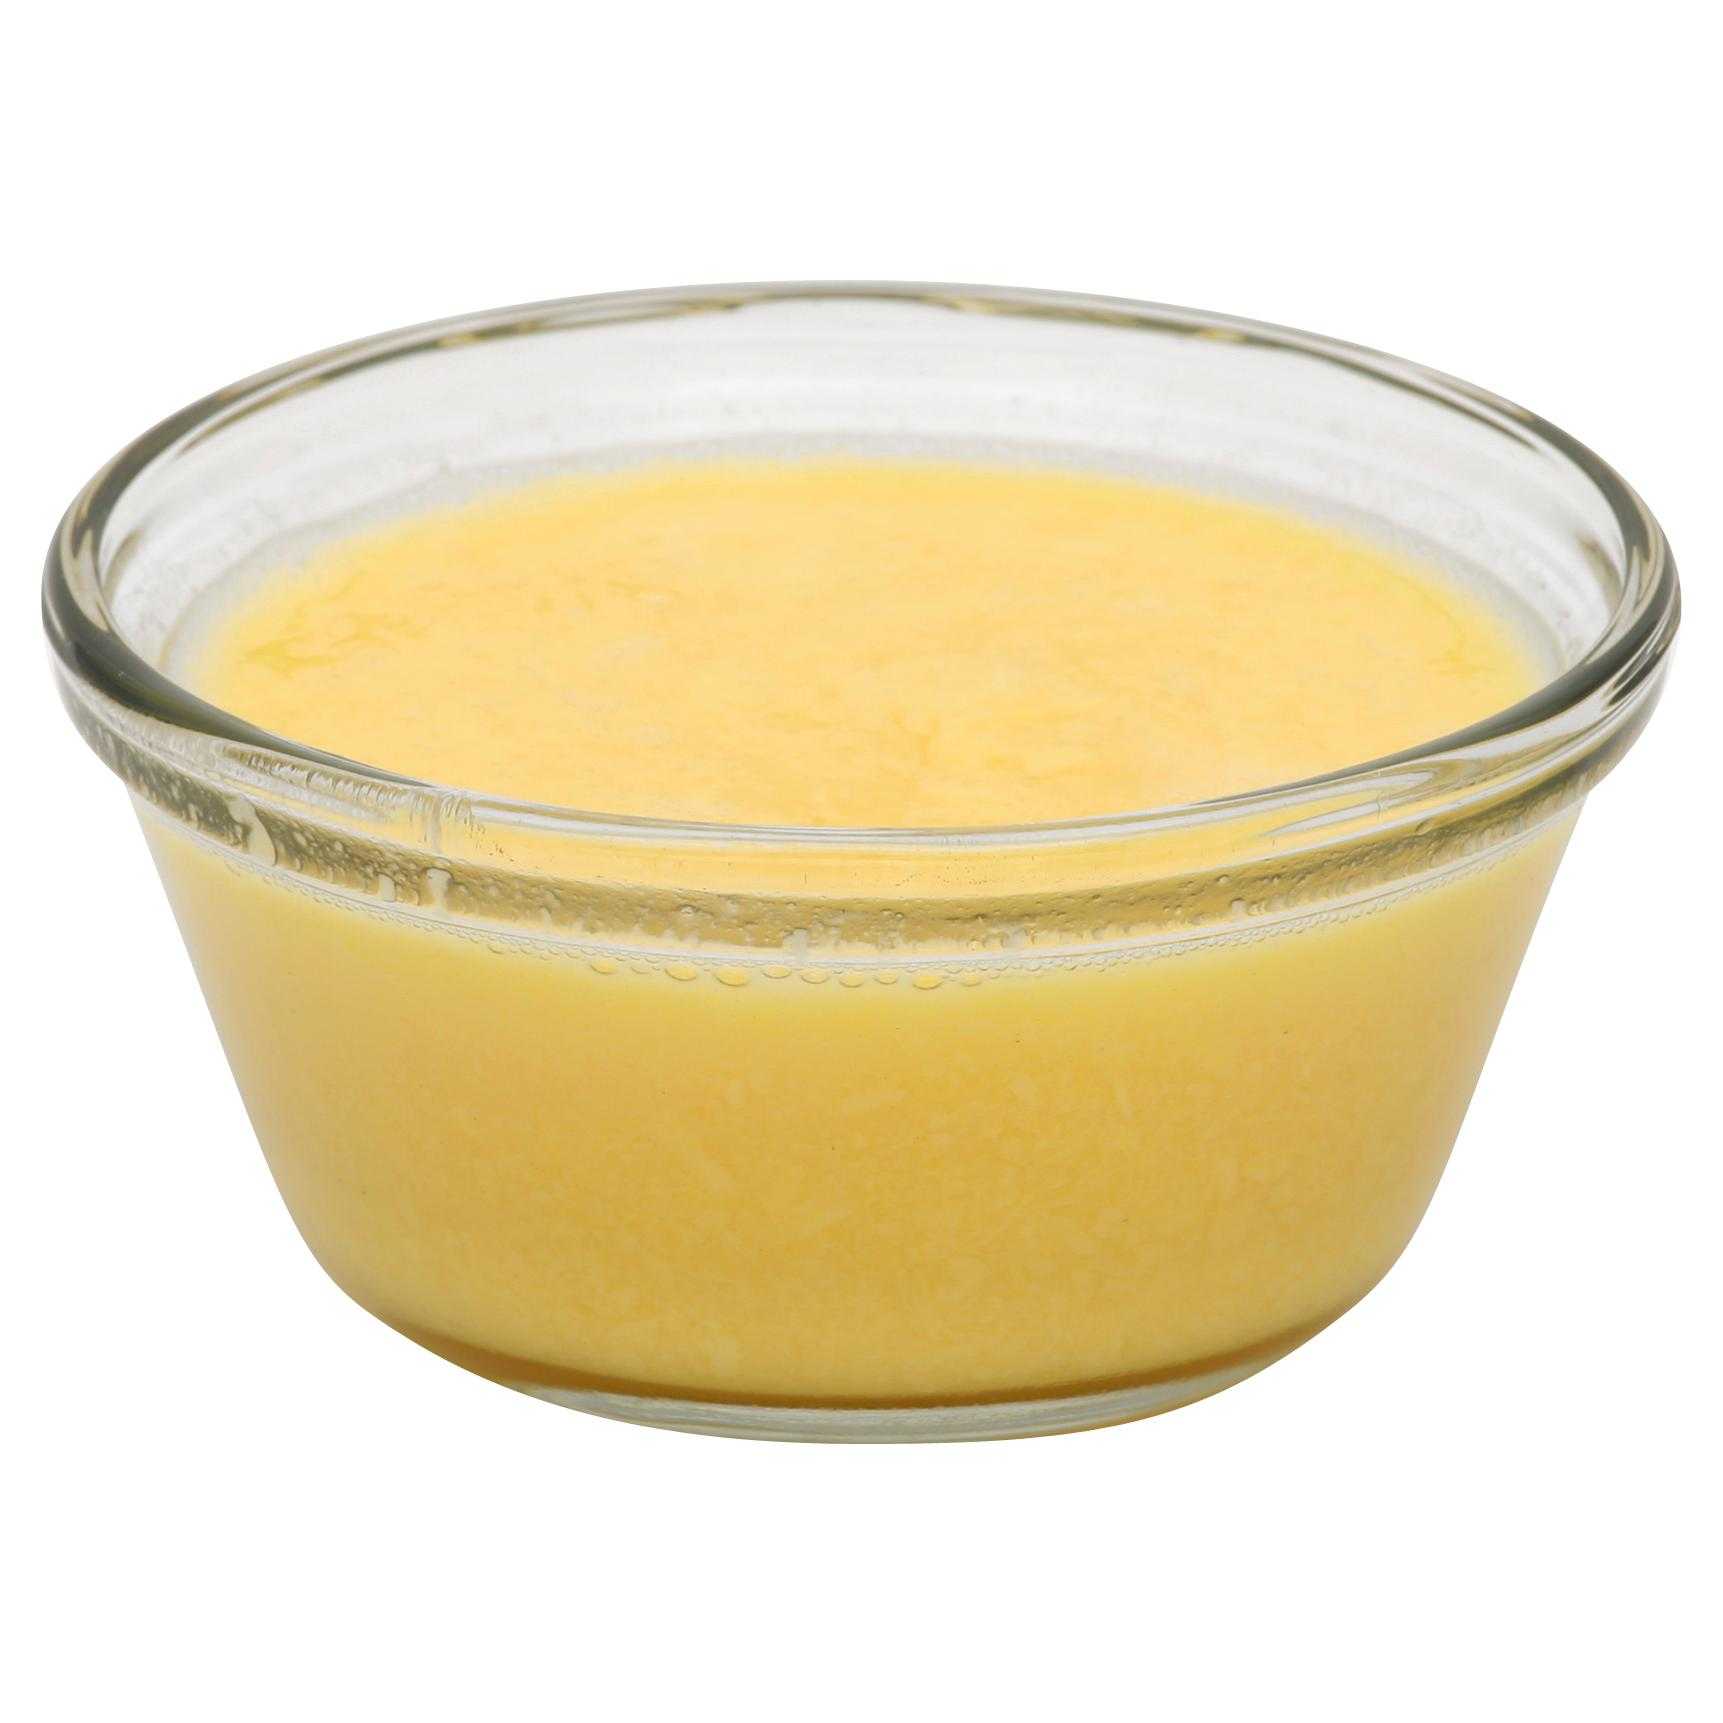 Papetti’s® Refrigerated No Fat, No Cholesterol Liquid Egg Substitute, 15/2 Lb Cartons